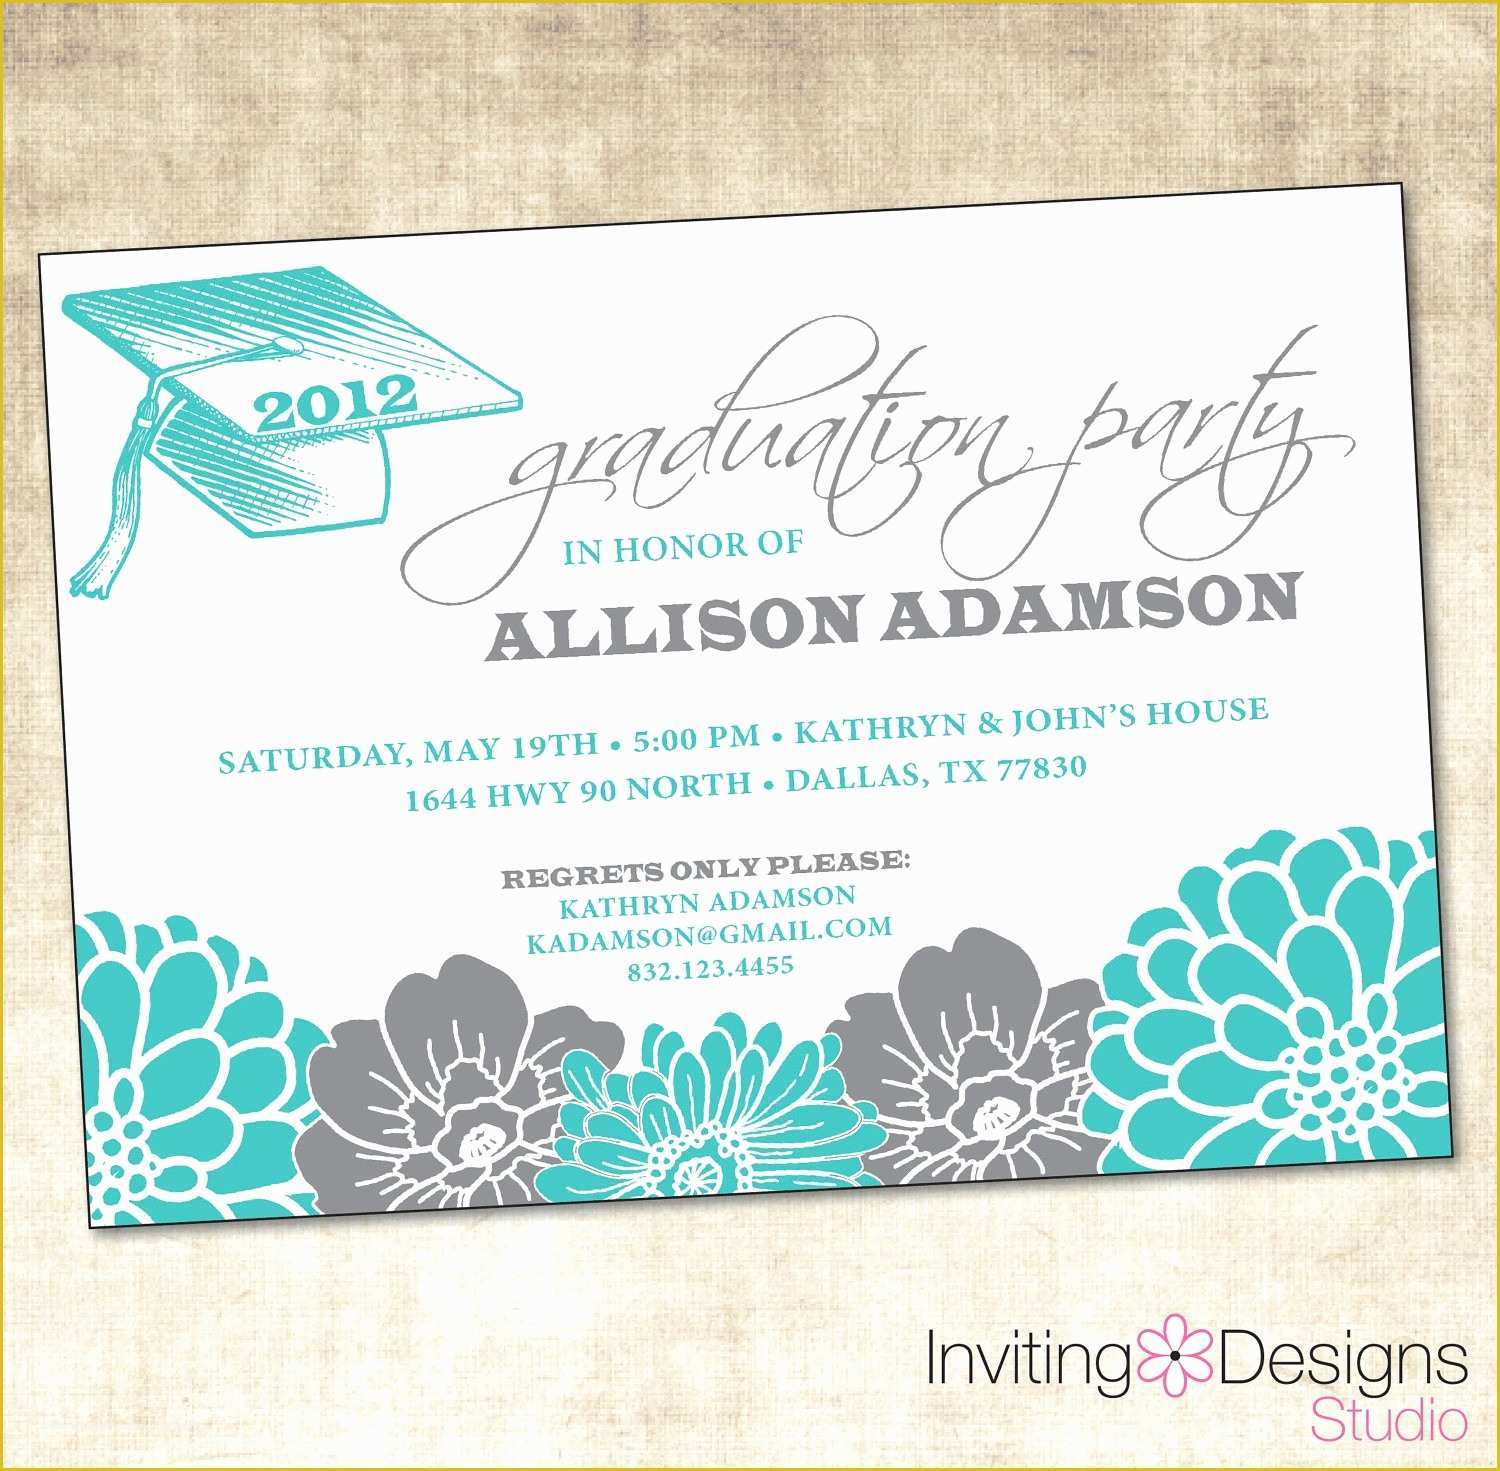 Graduation Dinner Invitation Template Free Of Sample Invitation Cards for Graduation Party Inspirationa